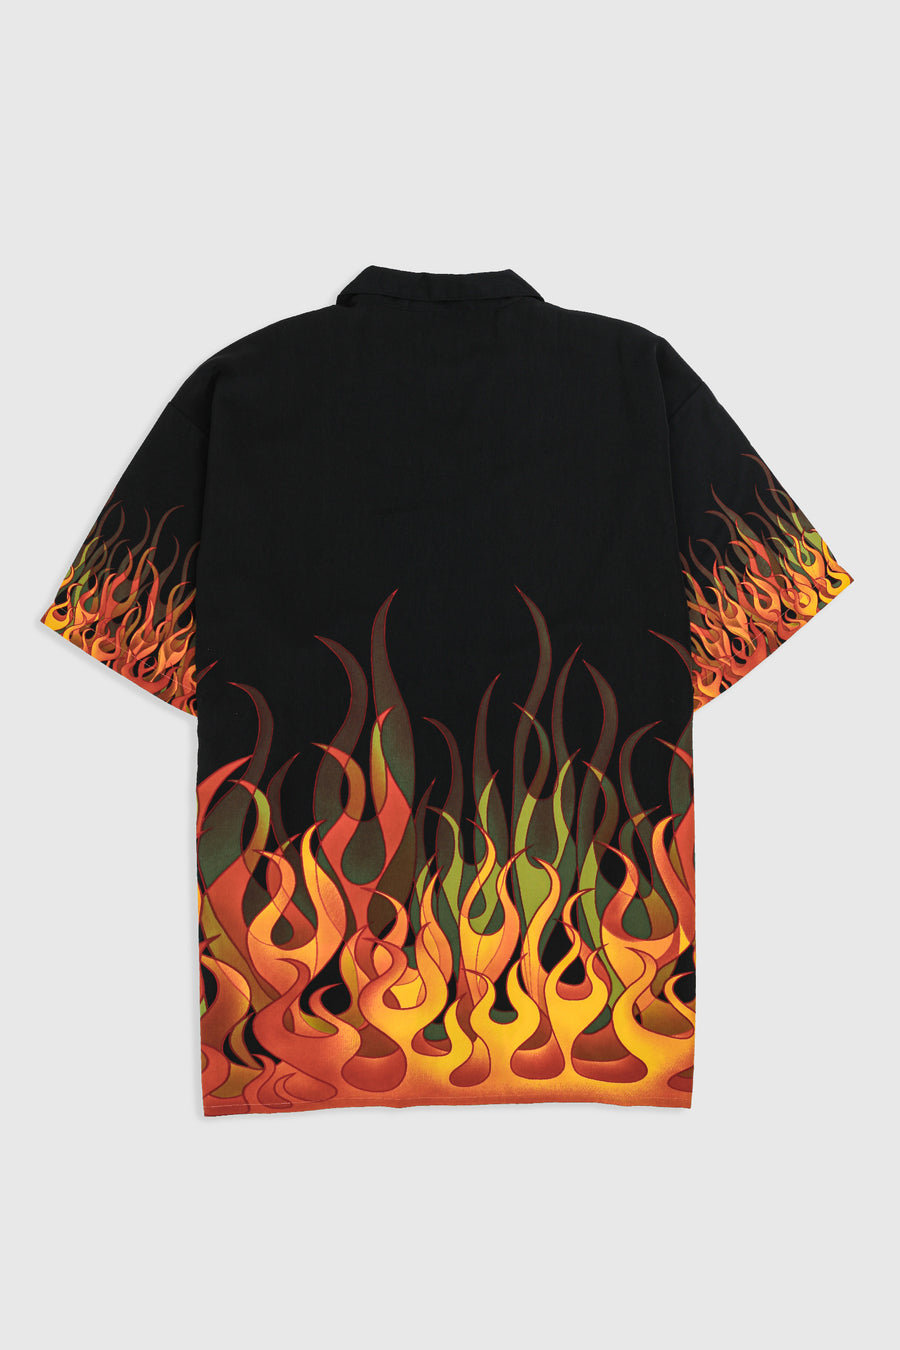 Deadstock Dragonfly Flames Camp Shirt - XXL, XXXL, XXXXL